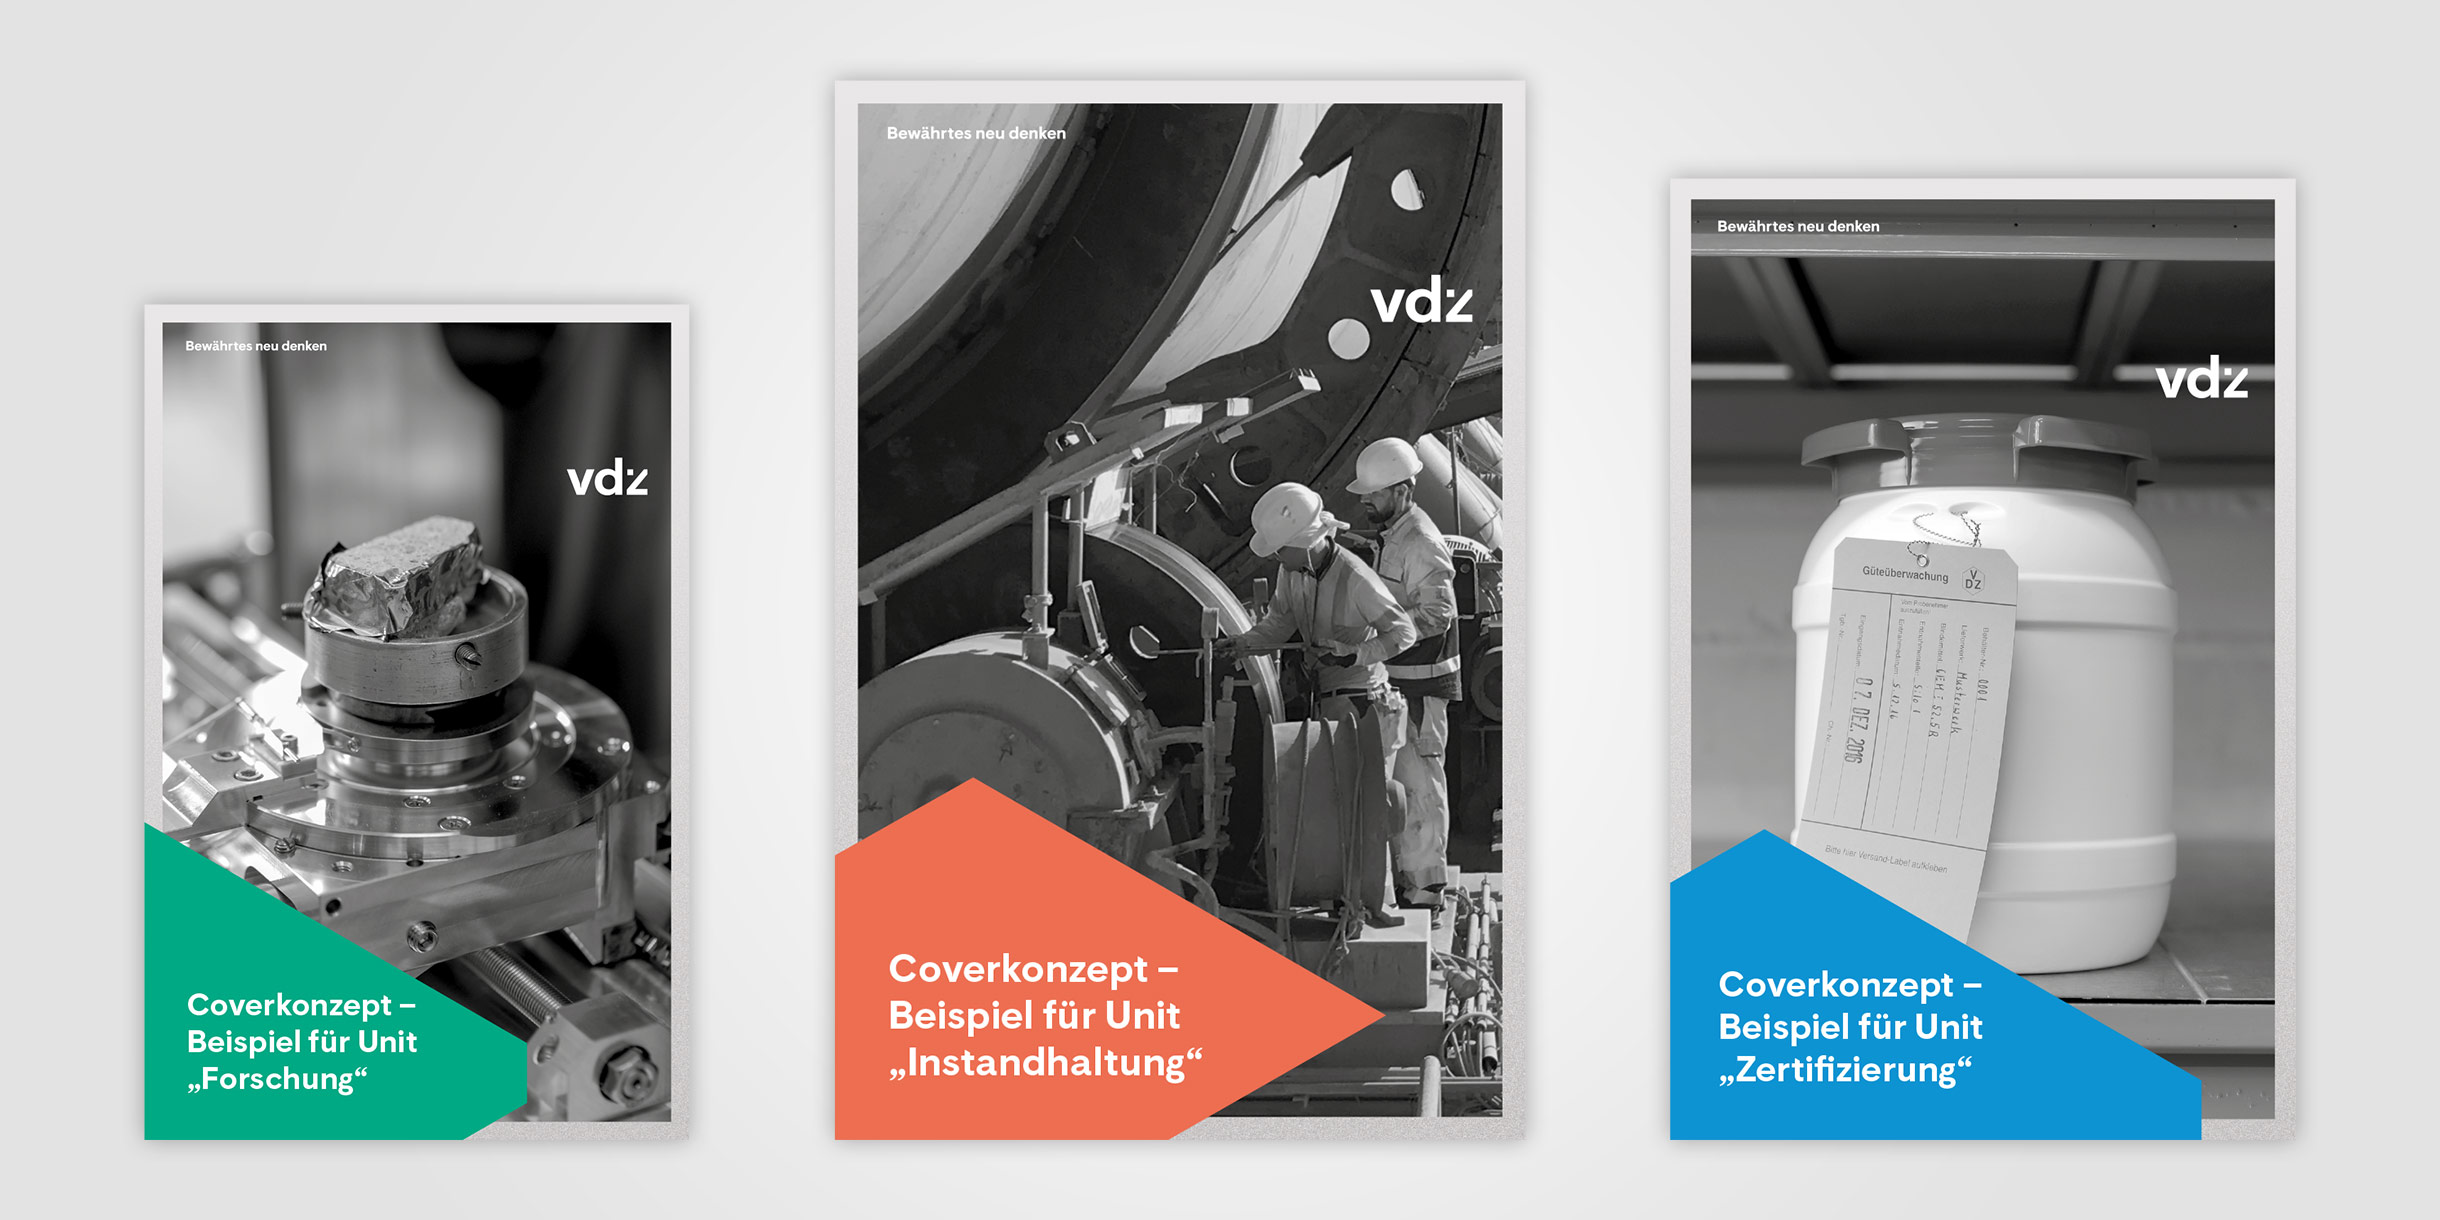 Verein Deutscher Zementwerke (VDZ) - Coverkonzept 1